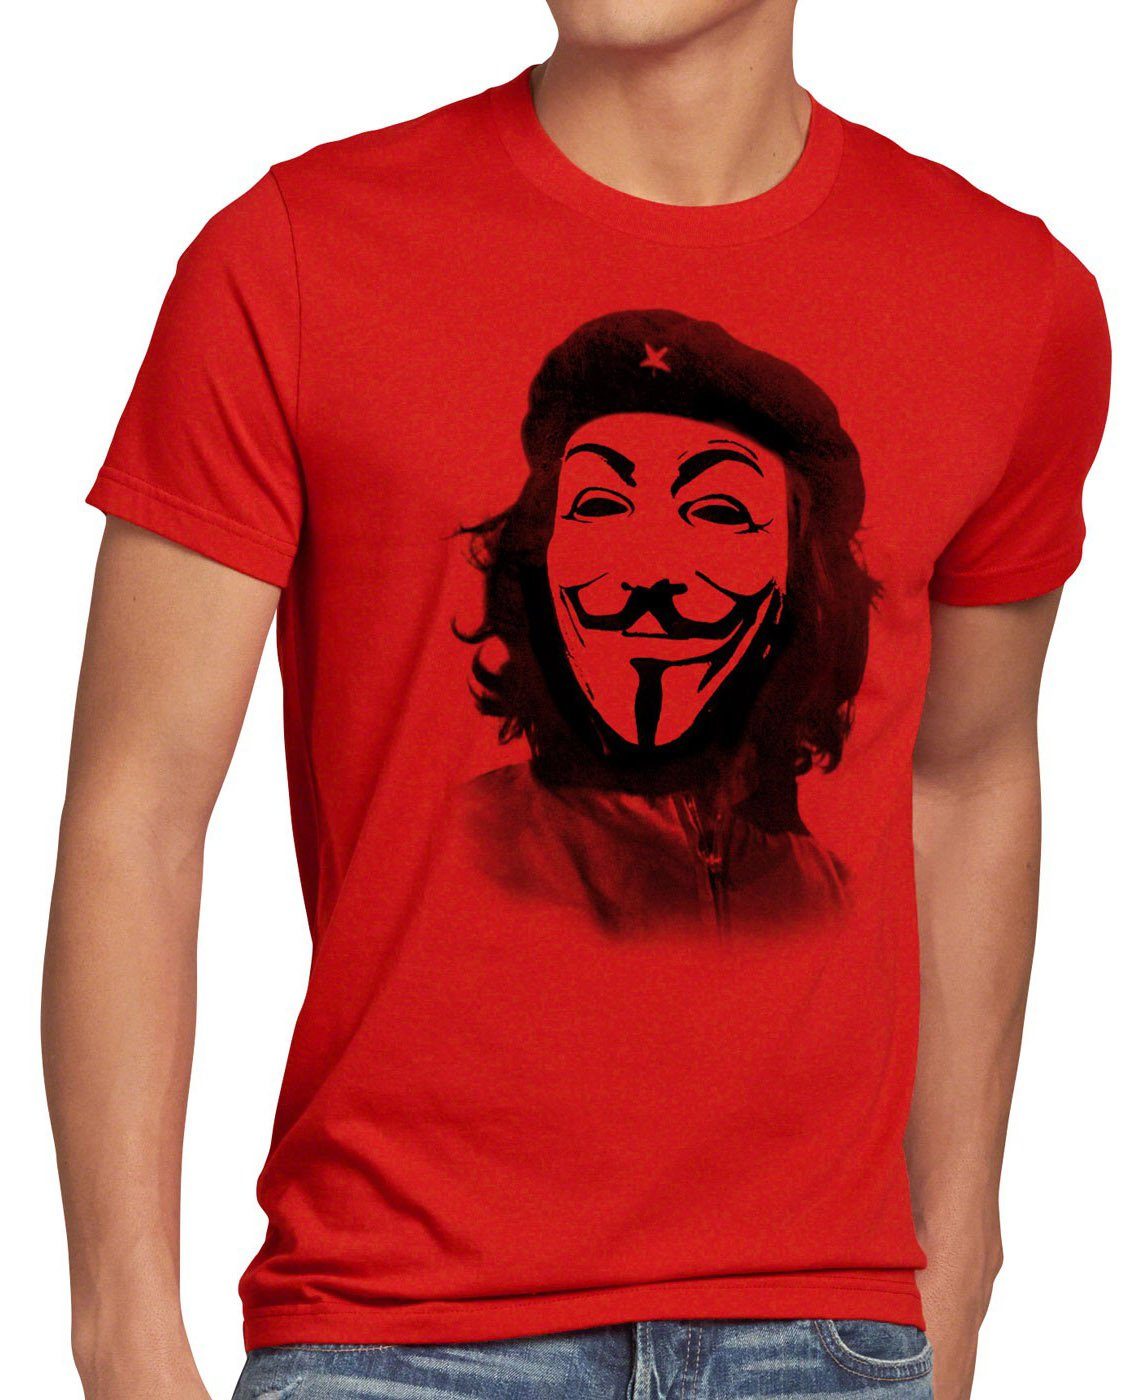 hacker kuba T-Shirt guy Guevara maske Herren Anonymous rot Che guy fawkes Print-Shirt g8 style3 fawkes occupy